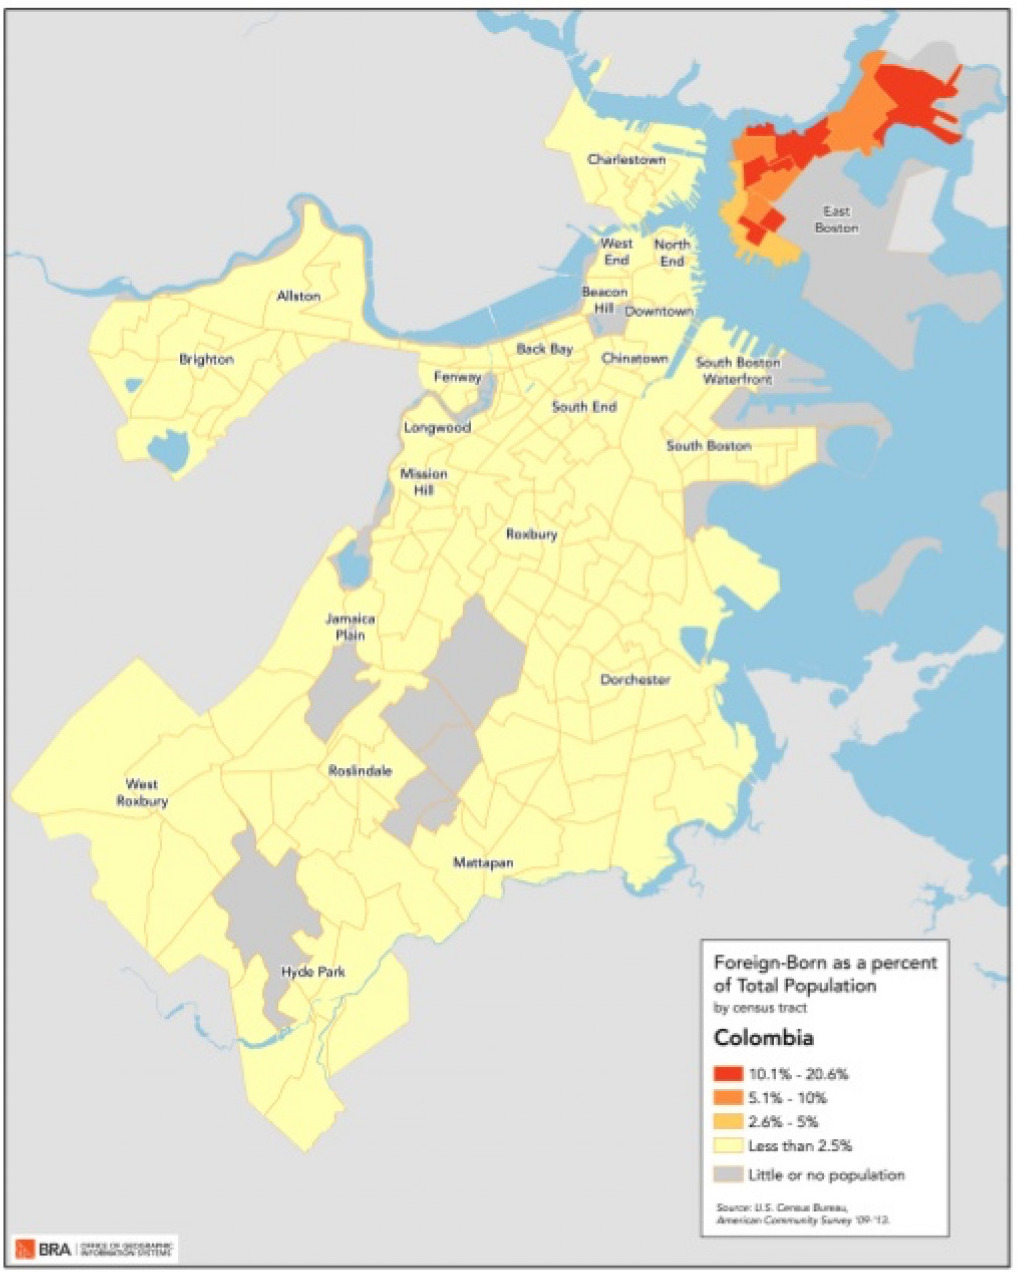 Colombians_map - Global Boston